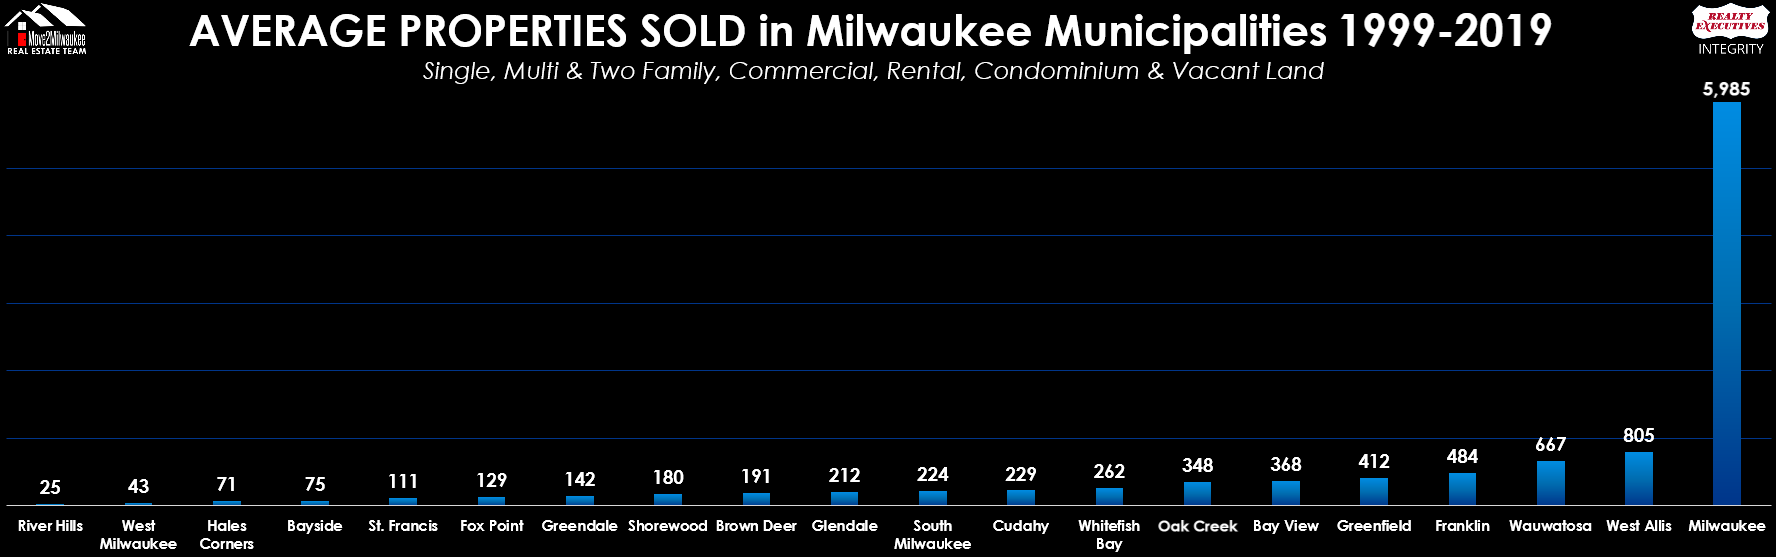 Average Number of Properties Sold Milwaukee